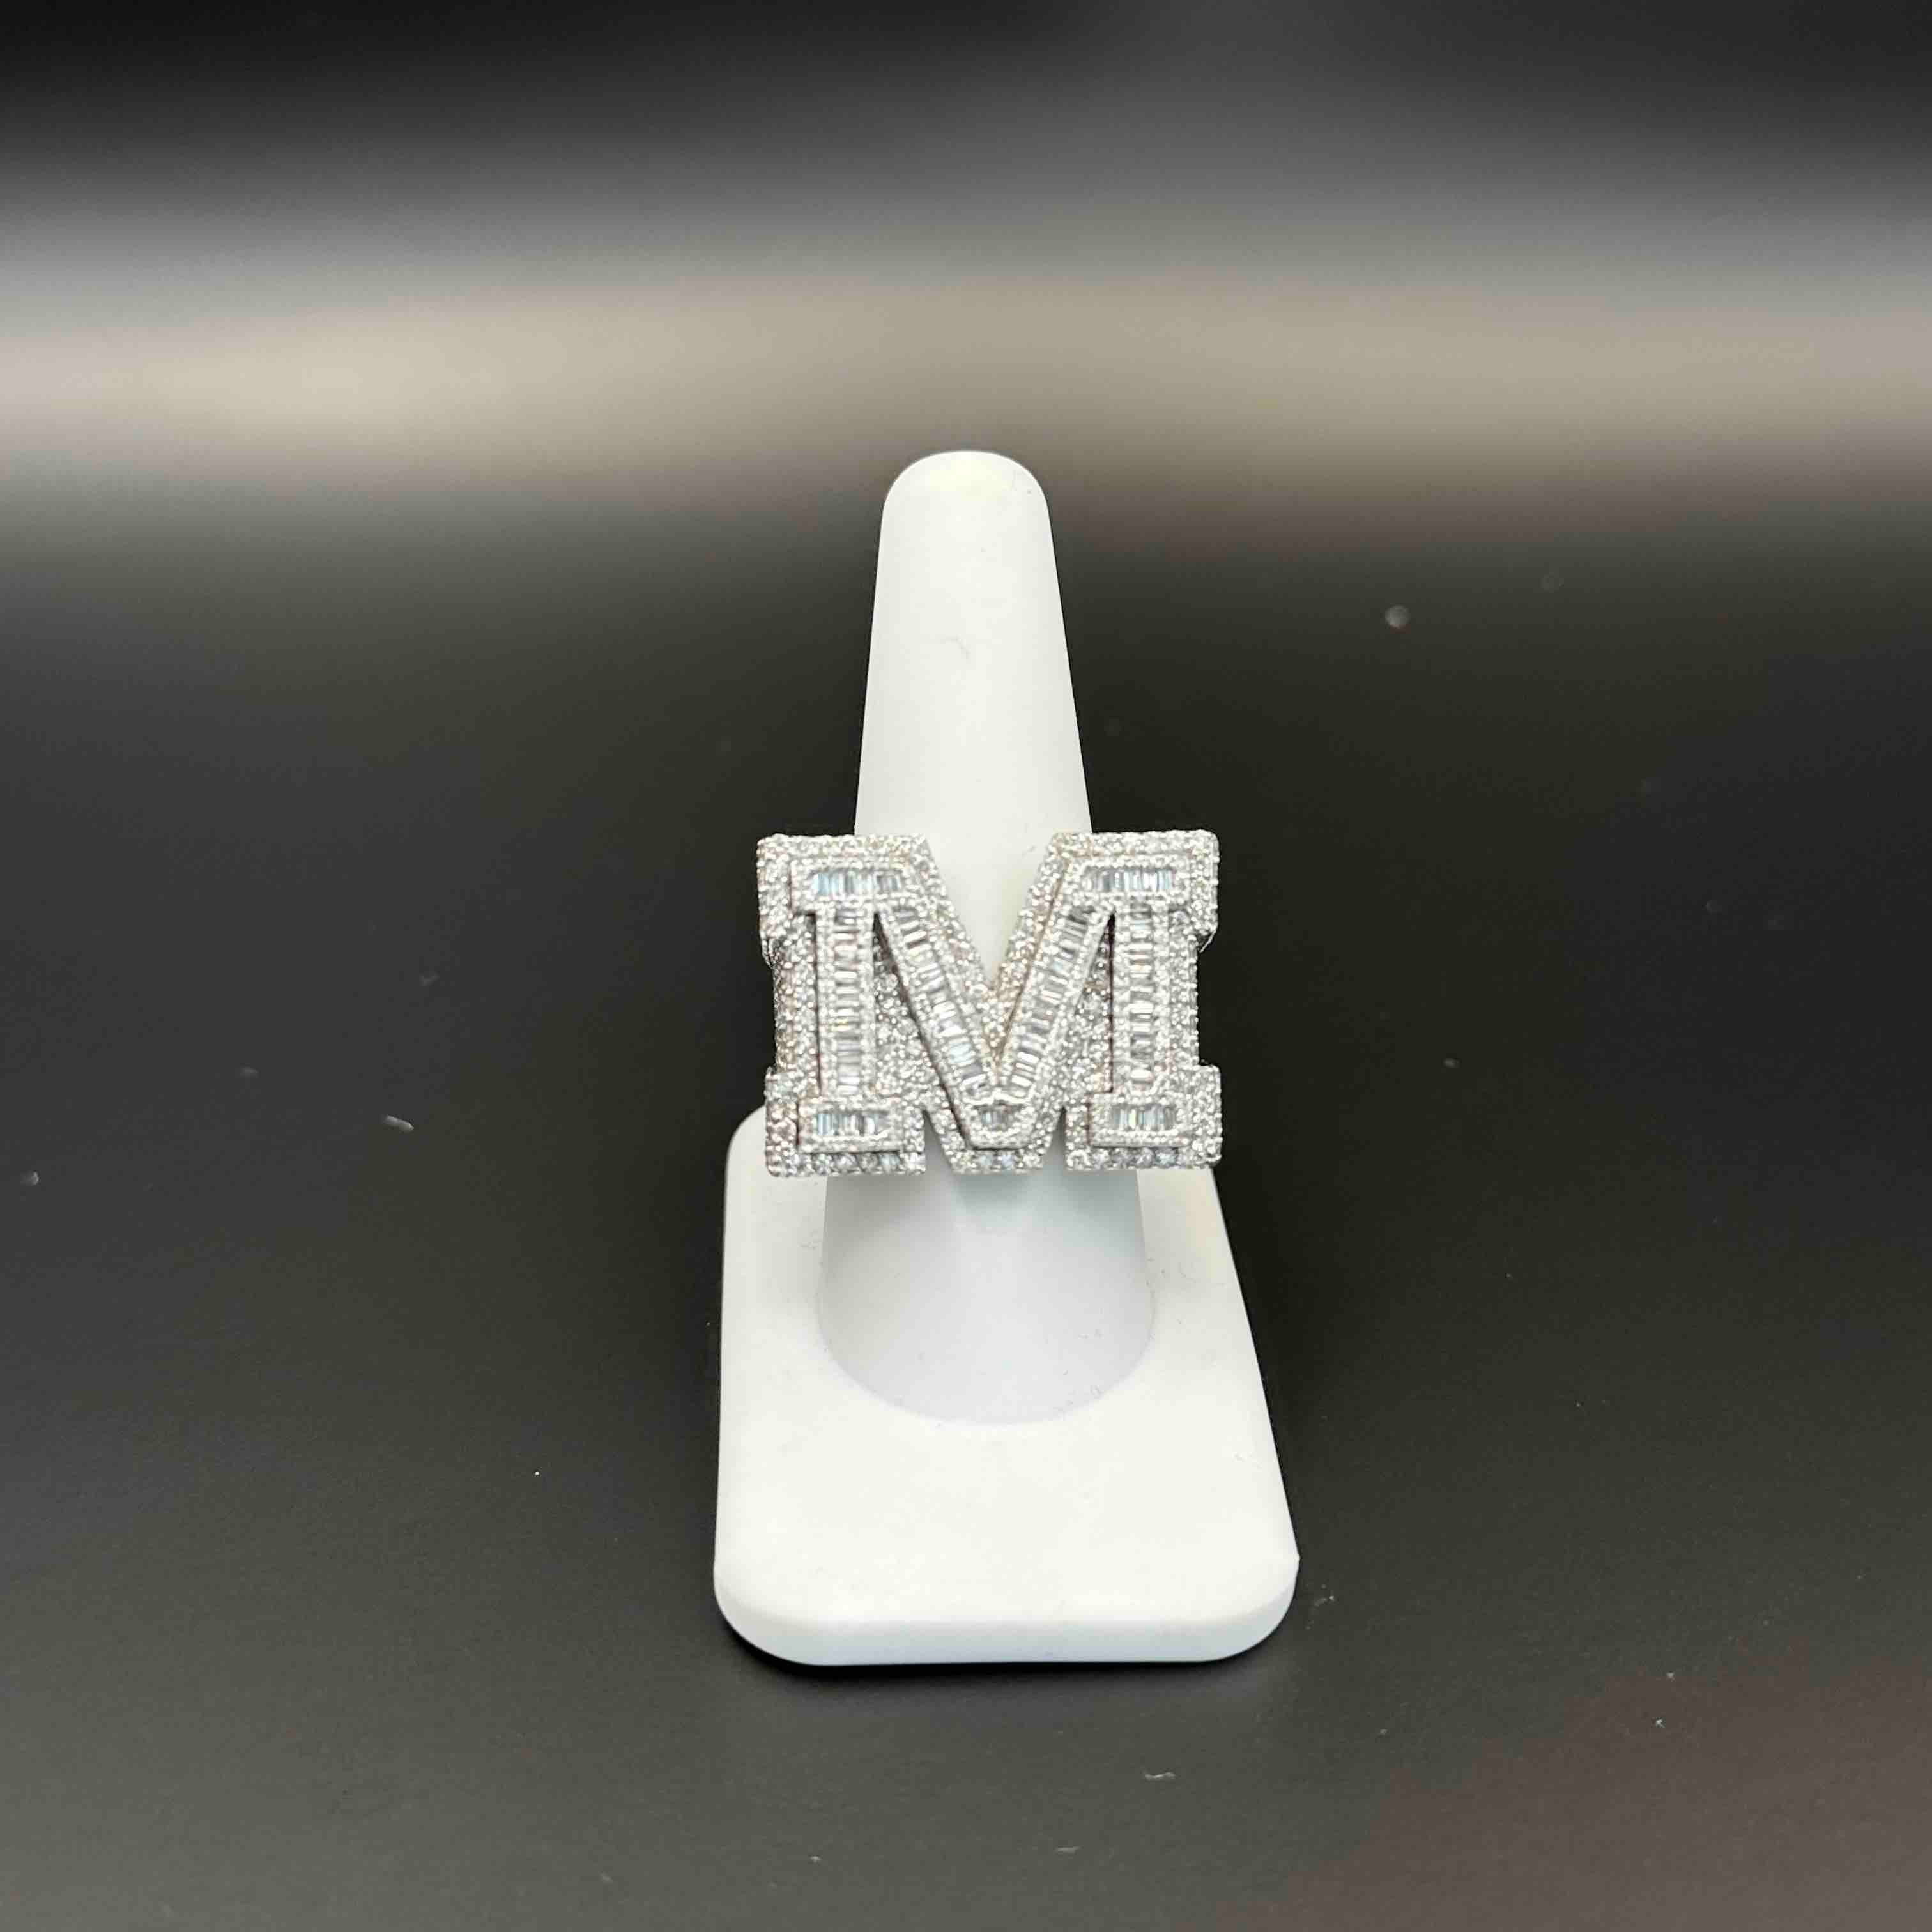 10k White Gold "M" Initial Ring